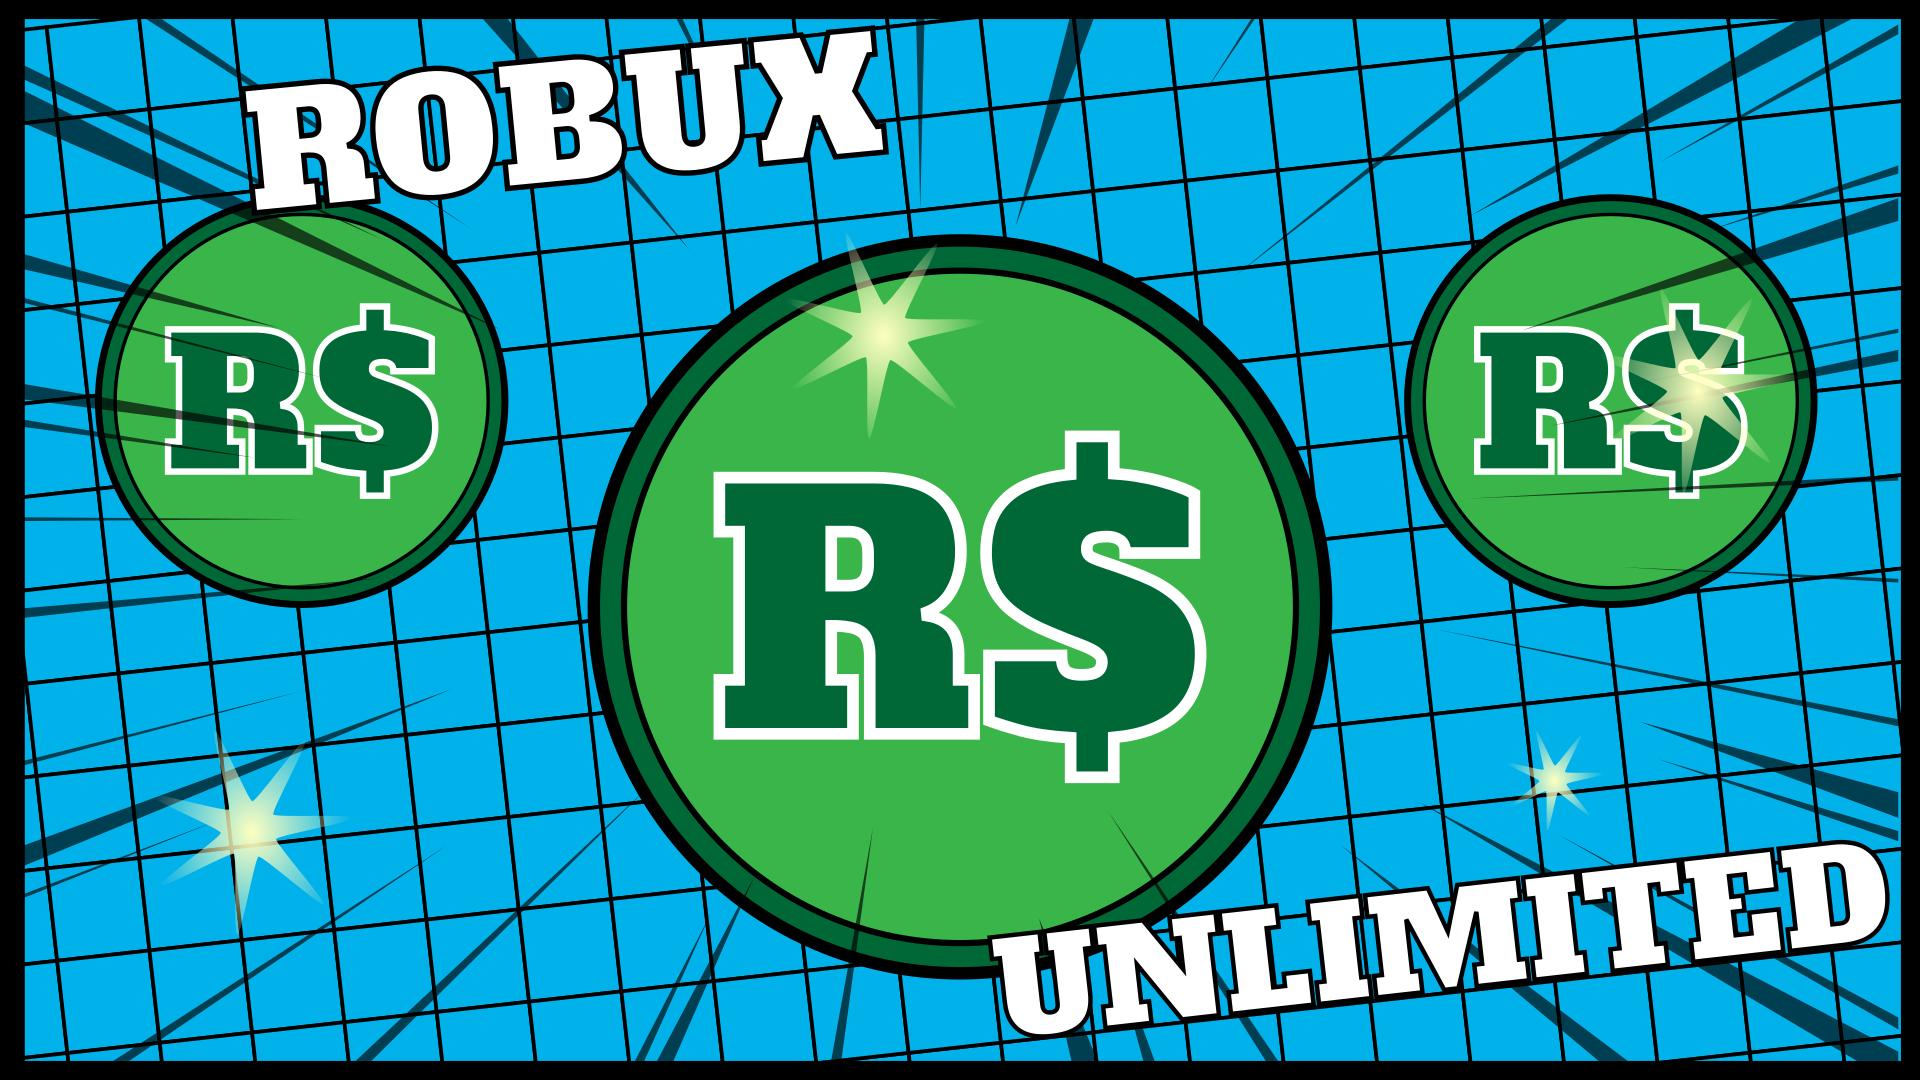 Free Robux Pro Guide Best Tix Booster 2019 For Android Apk Download - como conseguir robux gratis facilmente roblox amino en espanol